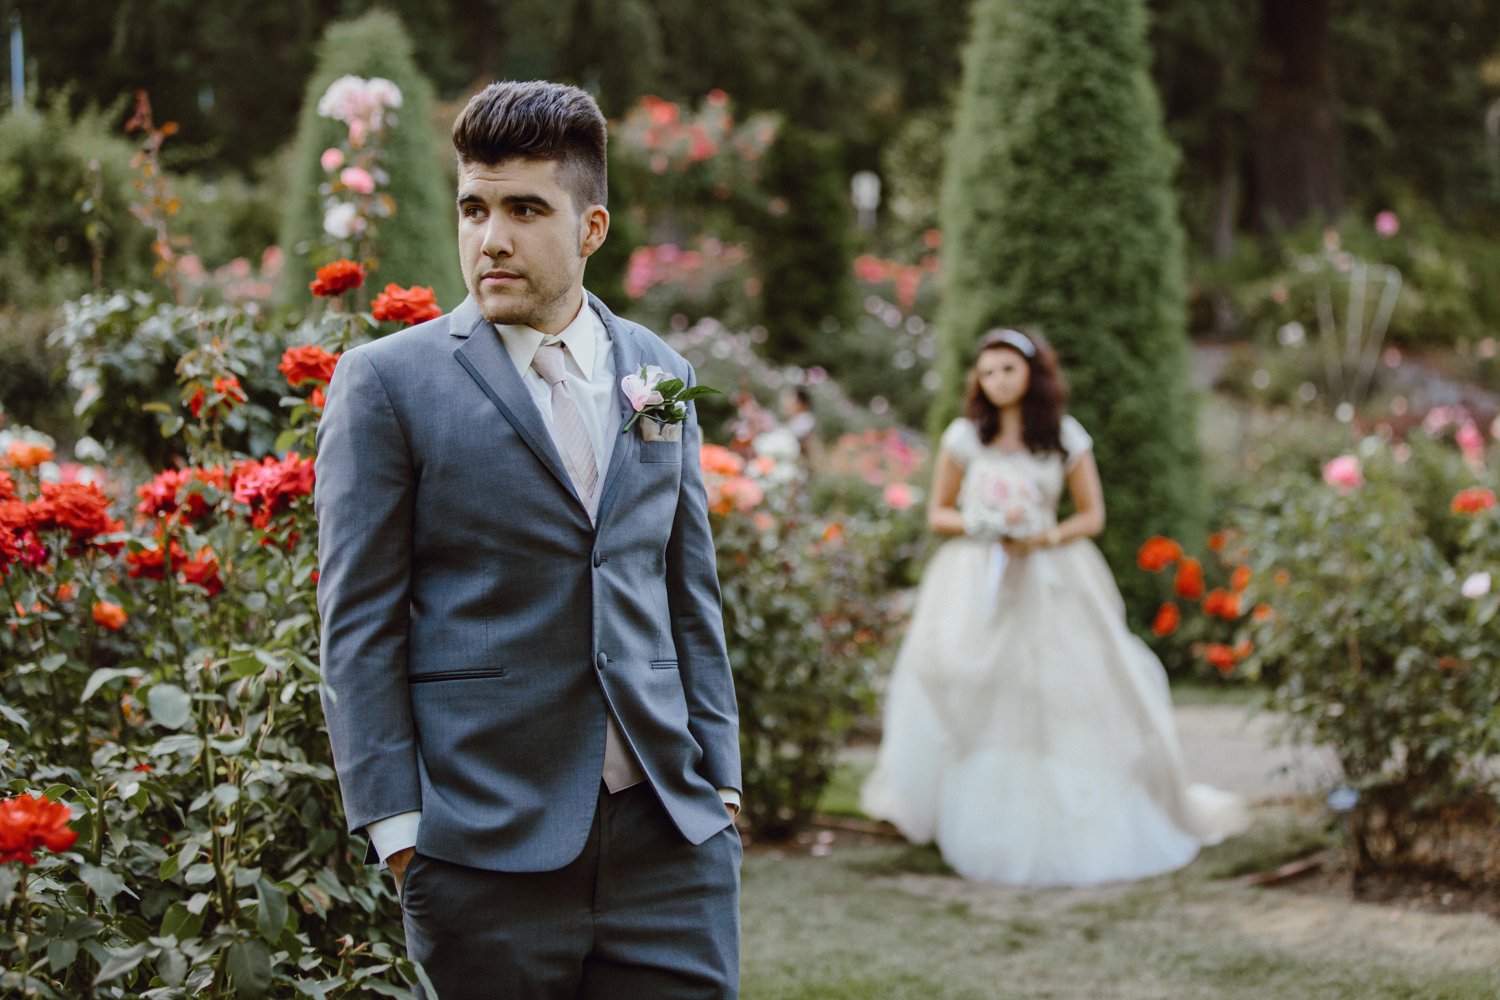 First look at a Portland Rose Garden Wedding in Washington Park